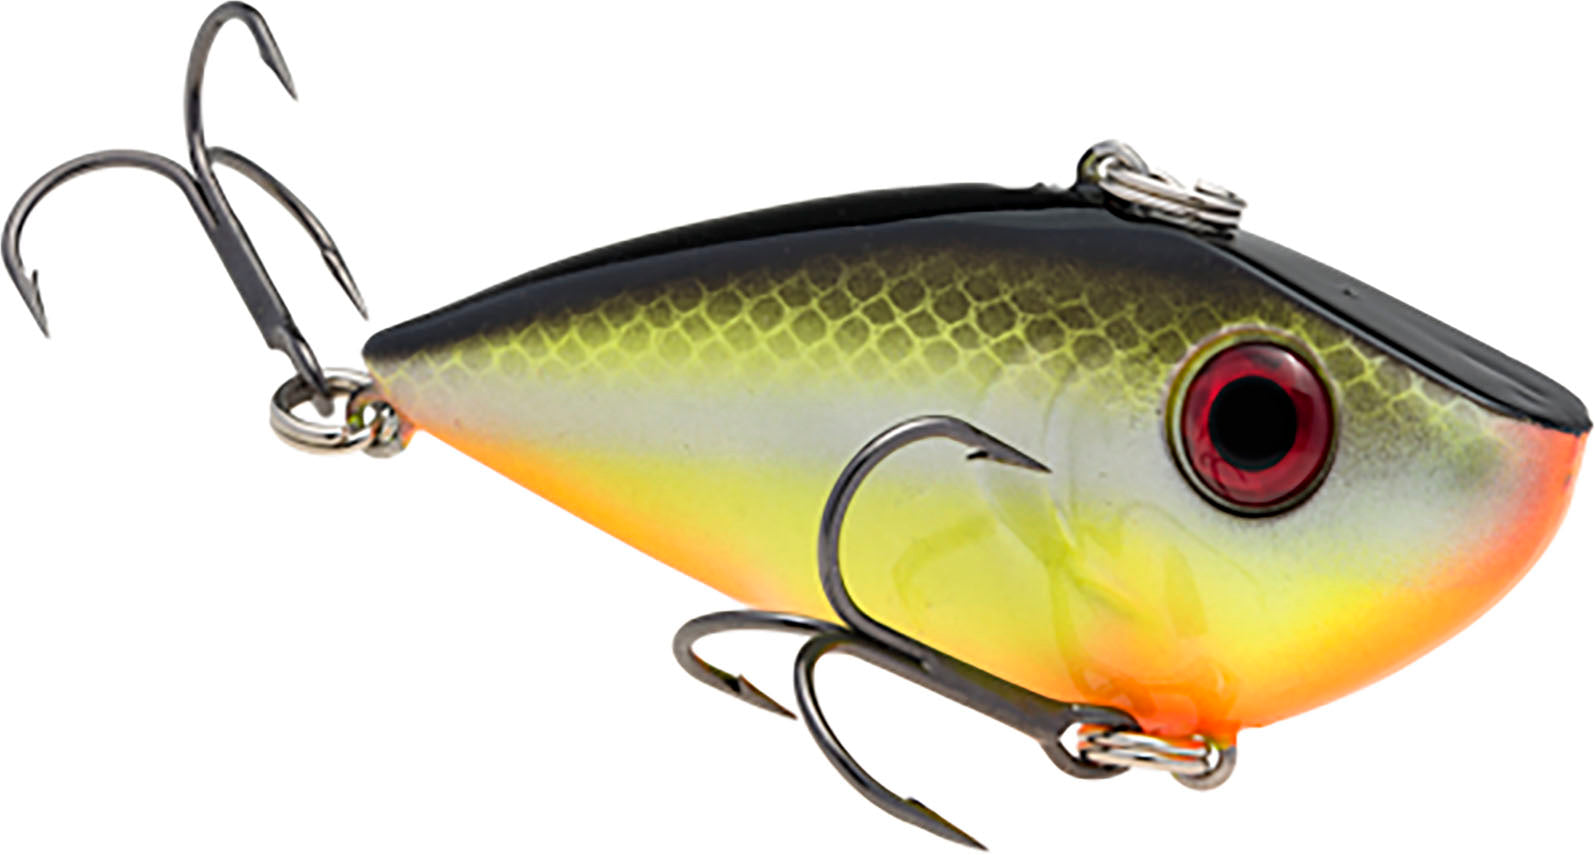 Strike King Red Eyed Shad Chartreuse Baitfish 3/8 oz REYESD38-432